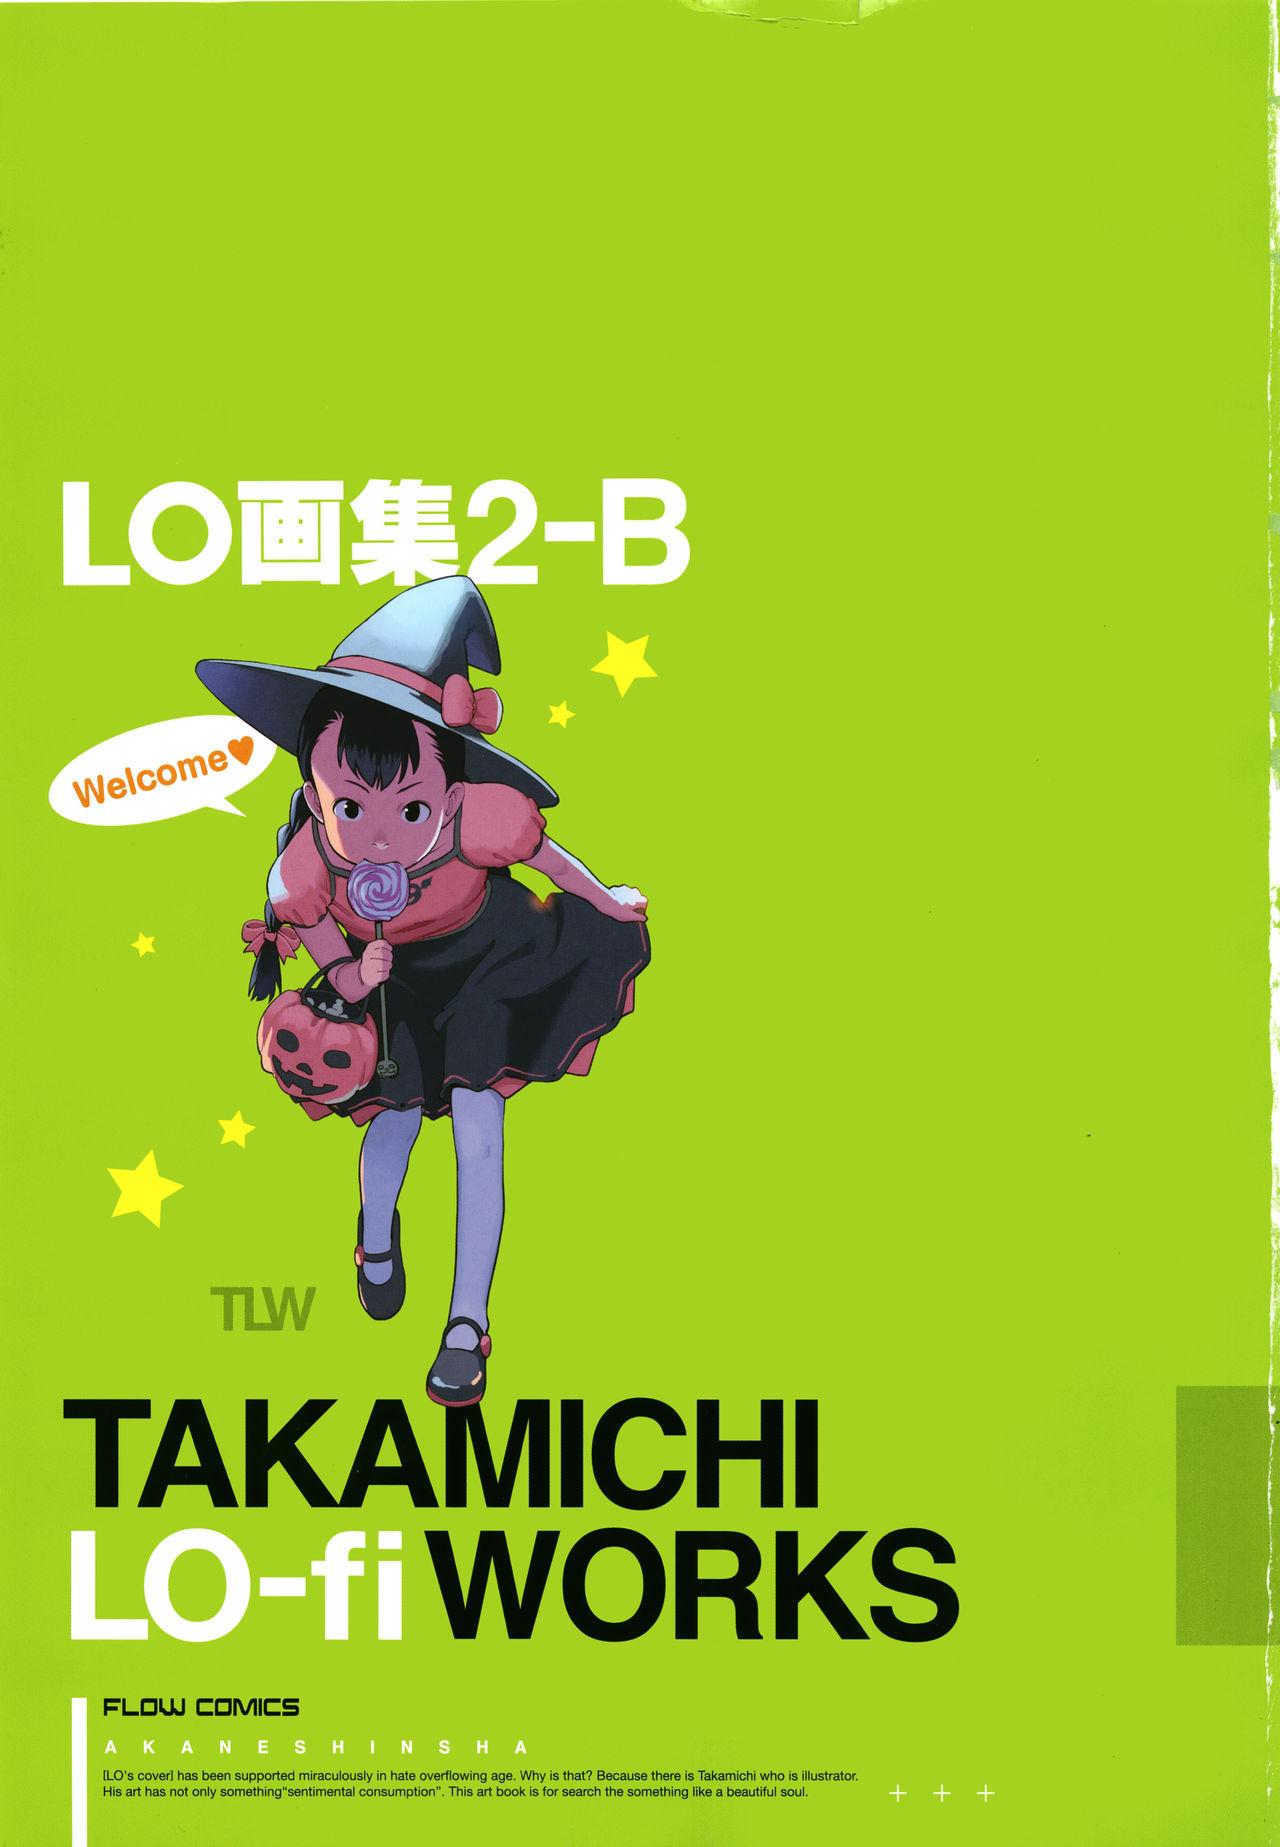 [Takamichi] LO Artbook 2-B TAKAMICHI LO-fi WORKS 3